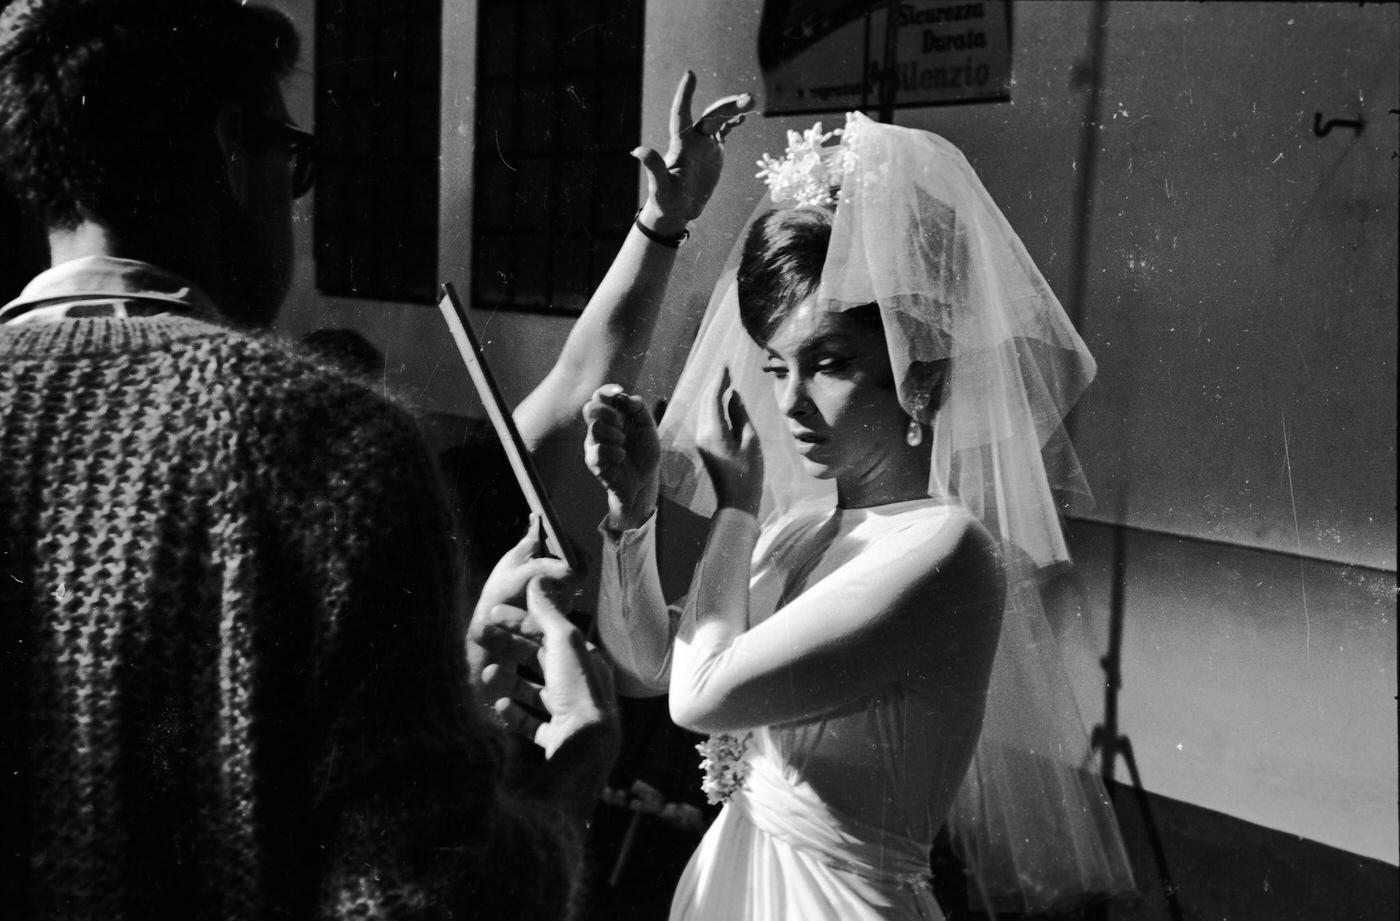 Gina Lollobrigida dressing as a bride for "Come September" in Roma, Italy, 1960.